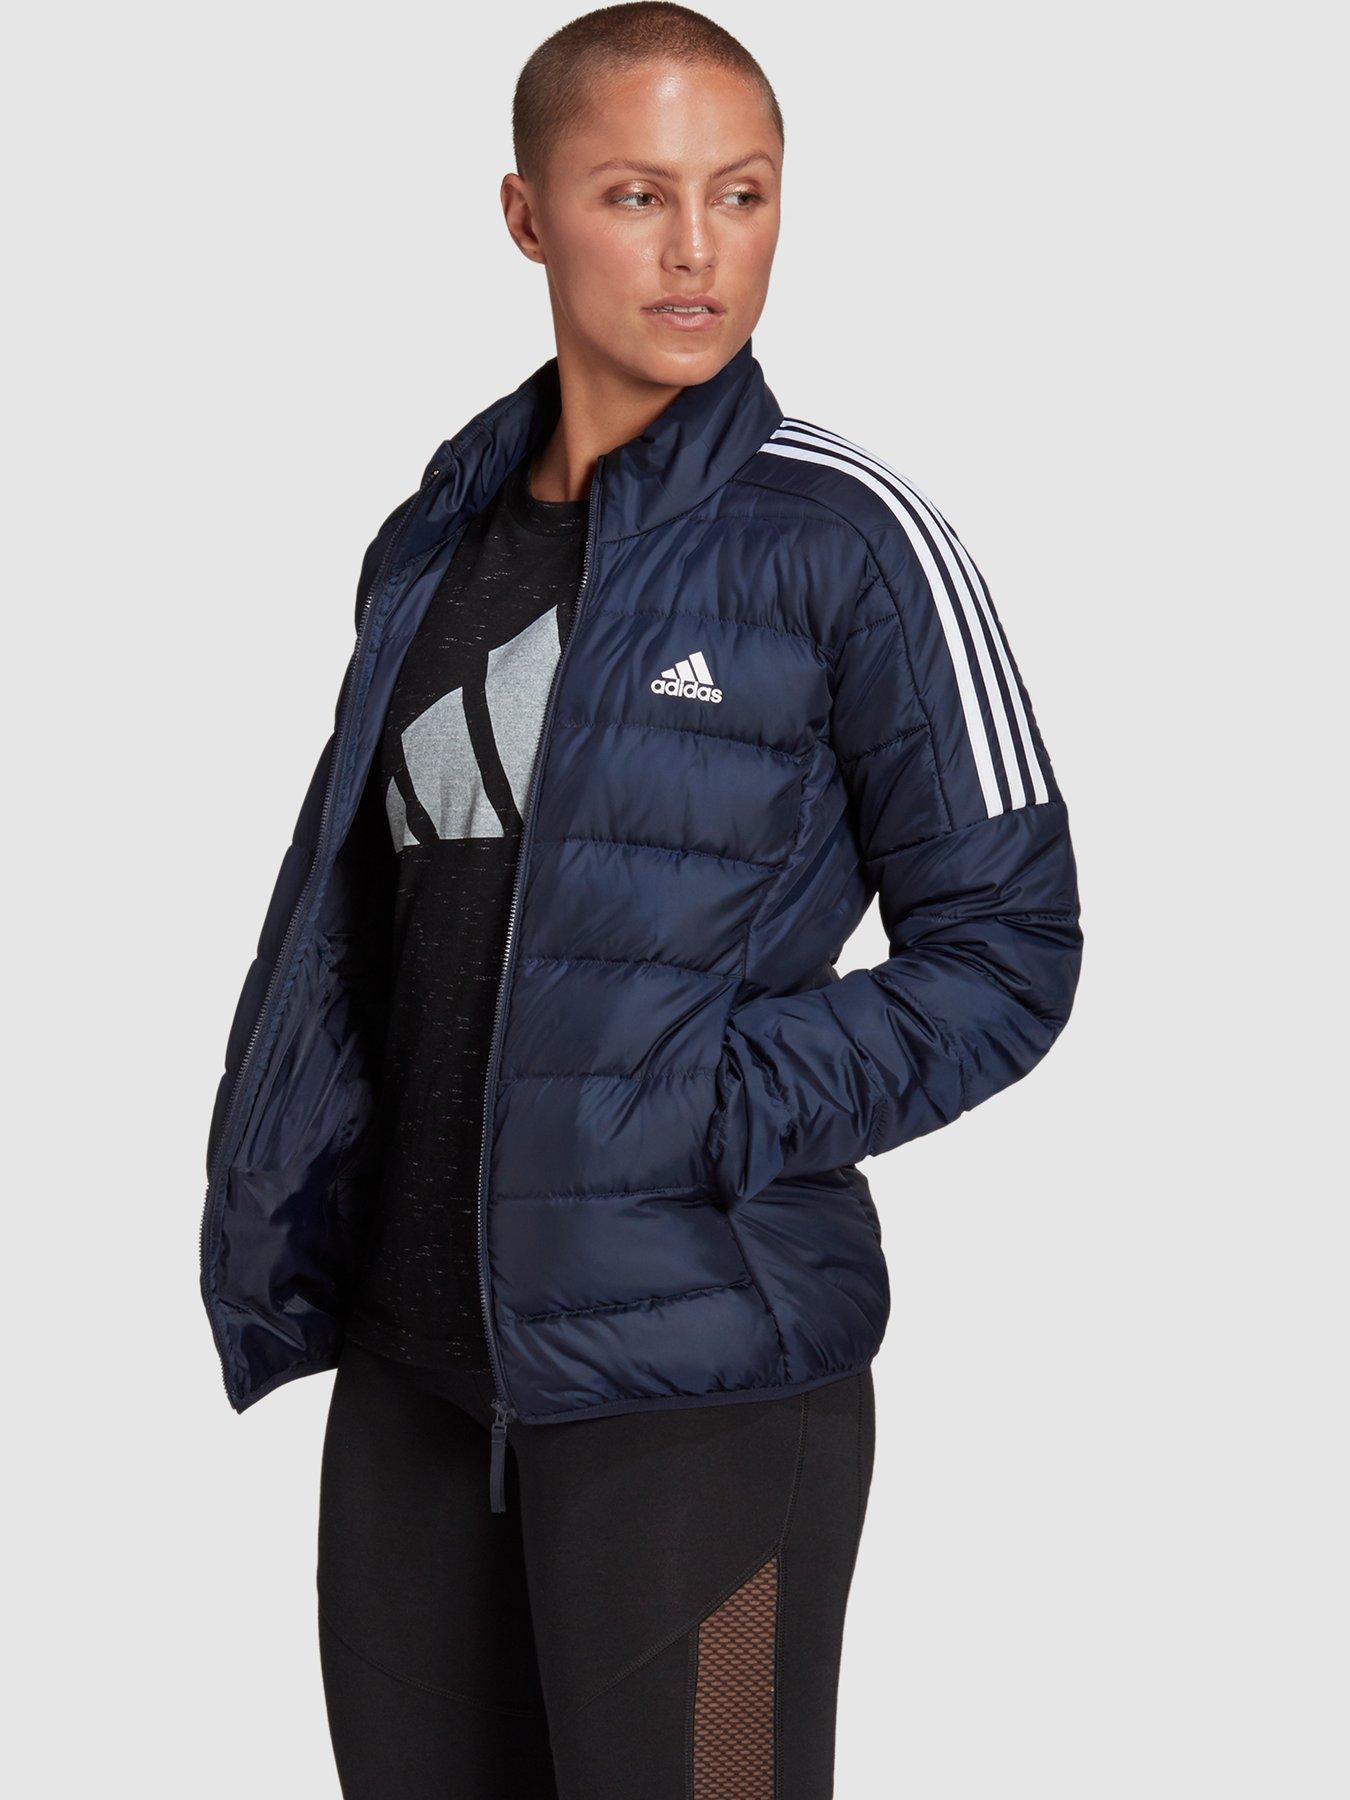 Navy Blue XL discount 76% Adidas waterproof jacket MEN FASHION Jackets Sports 